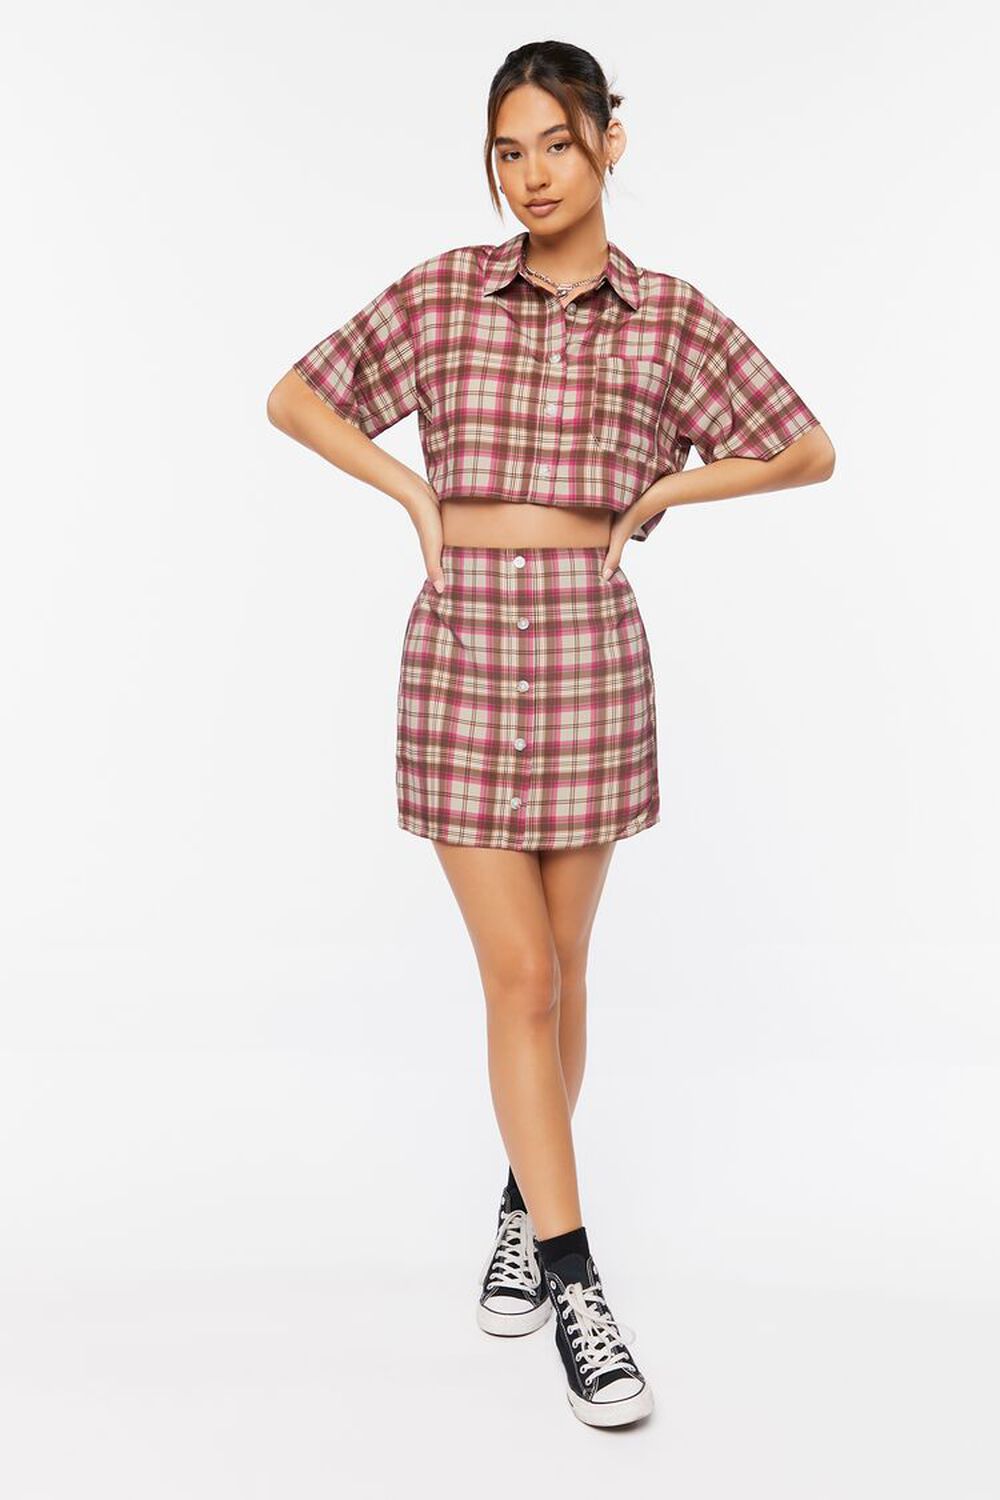 TAN/MULTI Plaid Cropped Shirt & Skirt Set, image 1